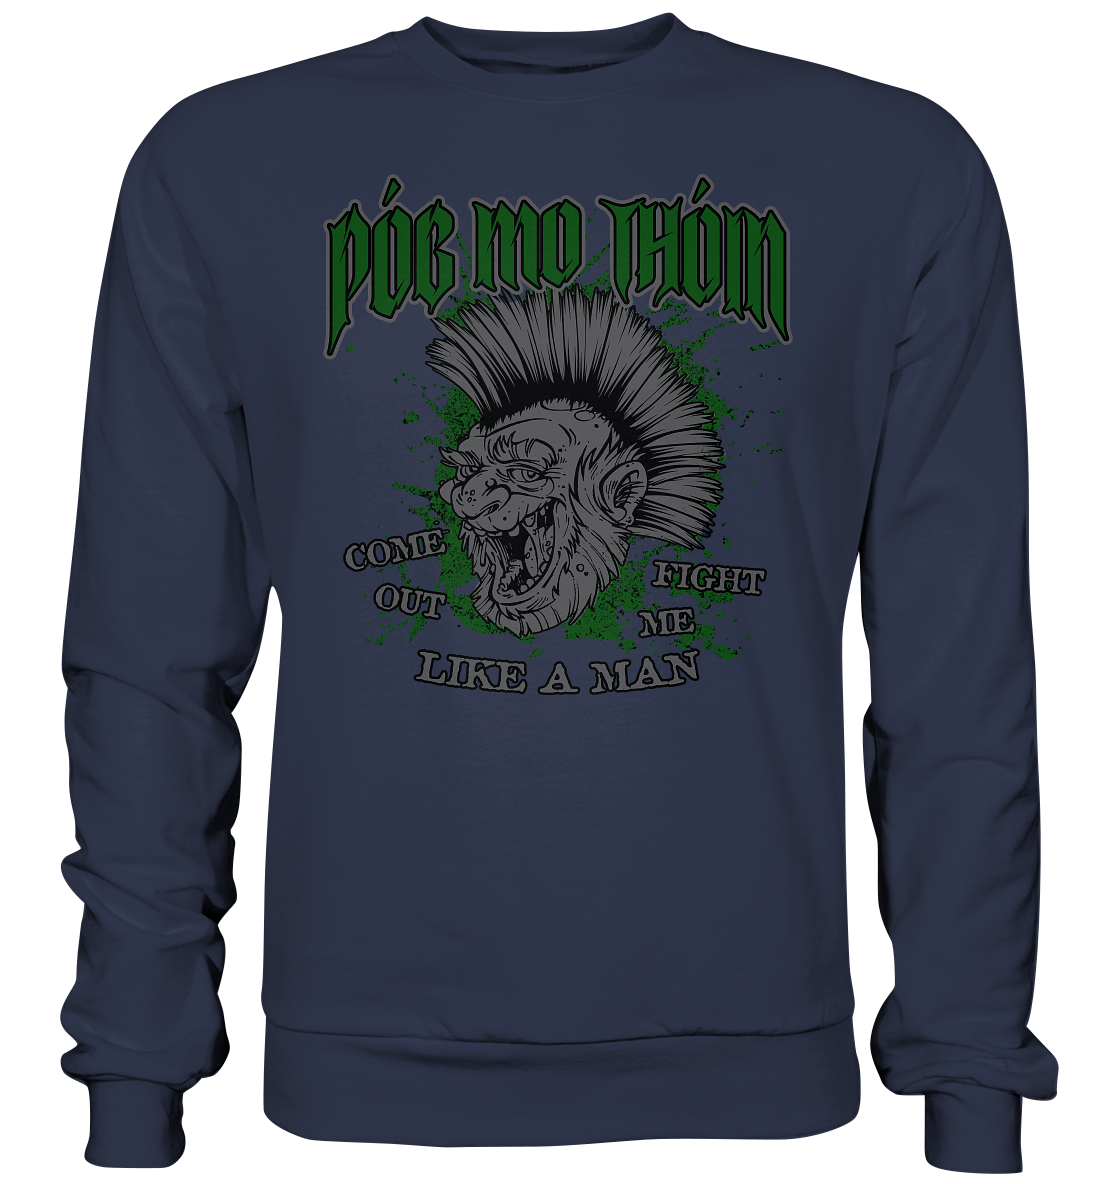 Póg Mo Thóin Streetwear "Come Out" - Premium Sweatshirt